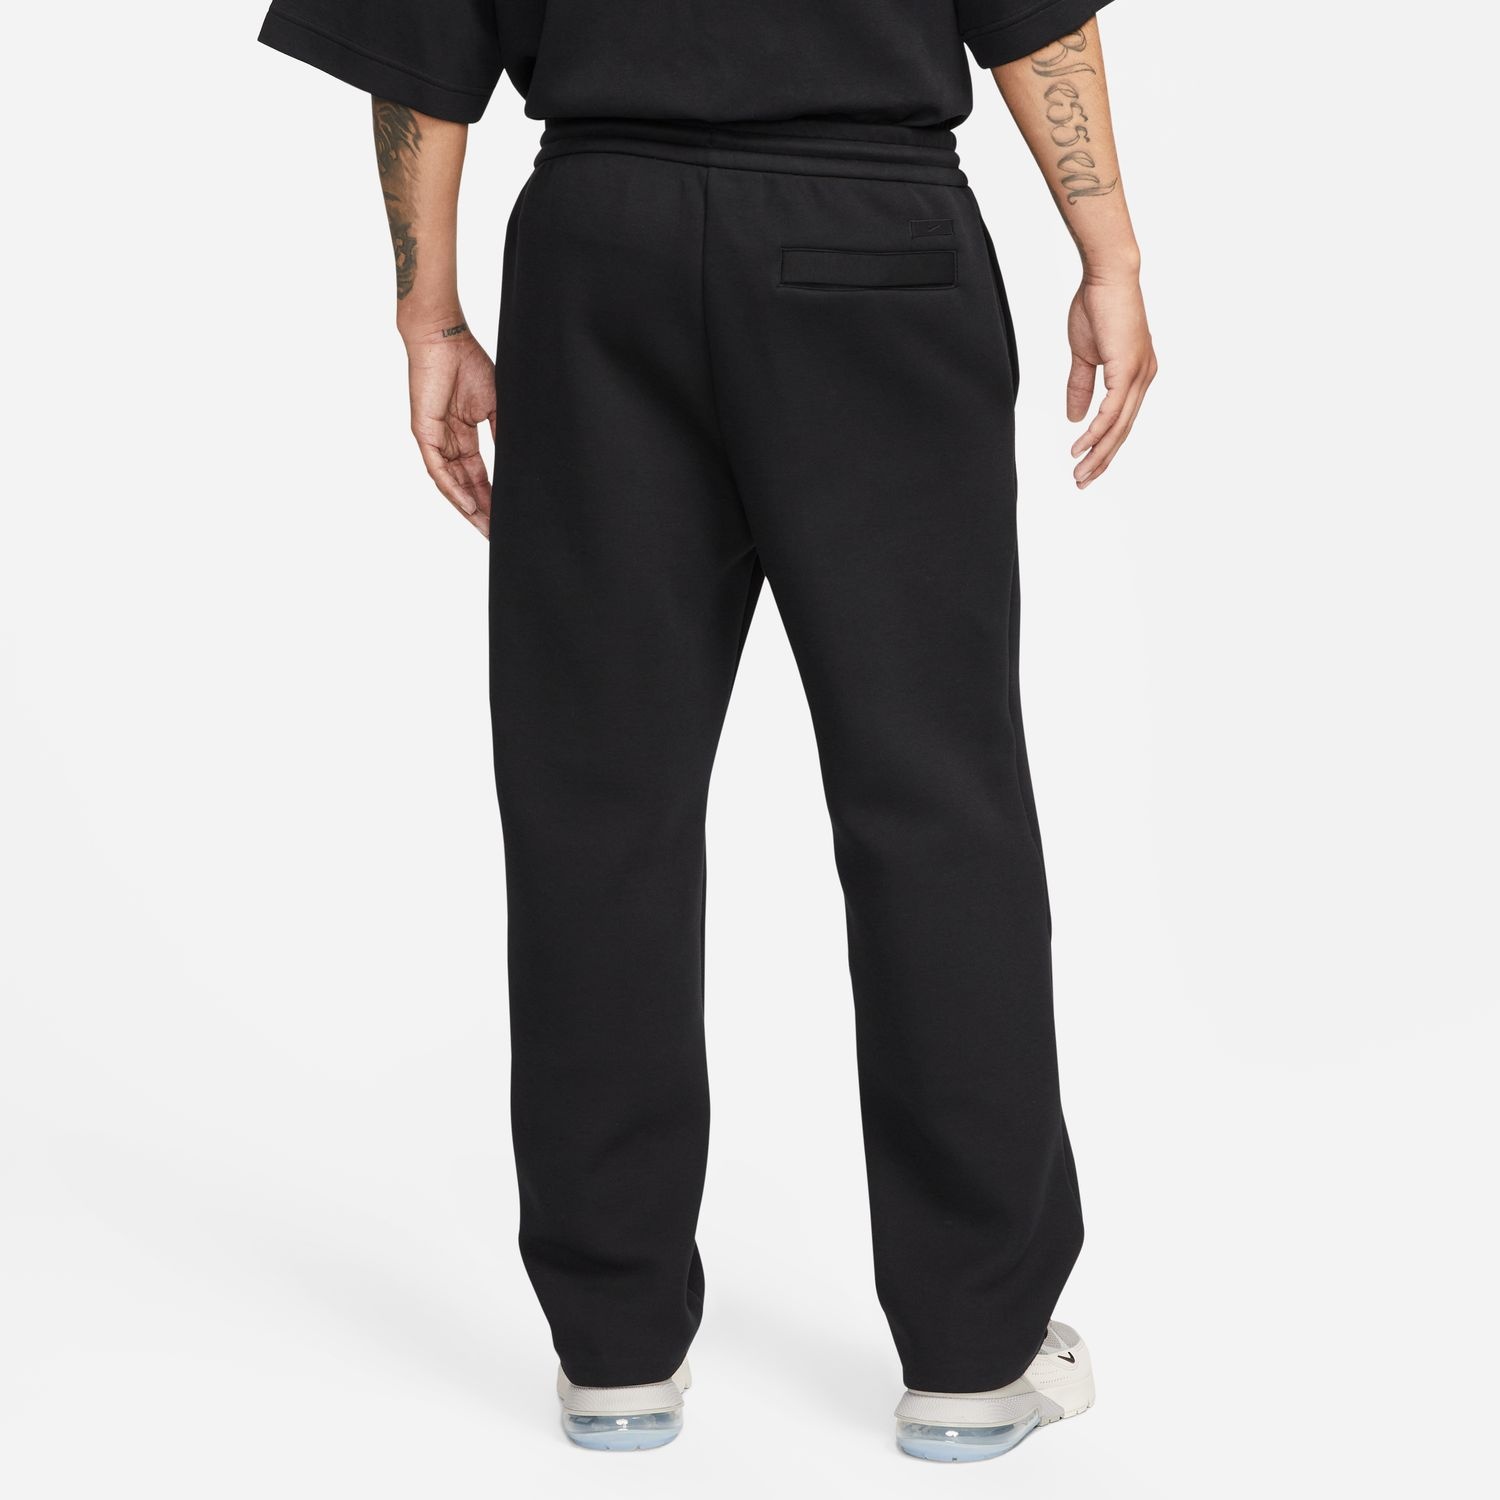 Nike Reimagined Tapered Tech Fleece Sweatpants in Black for Men